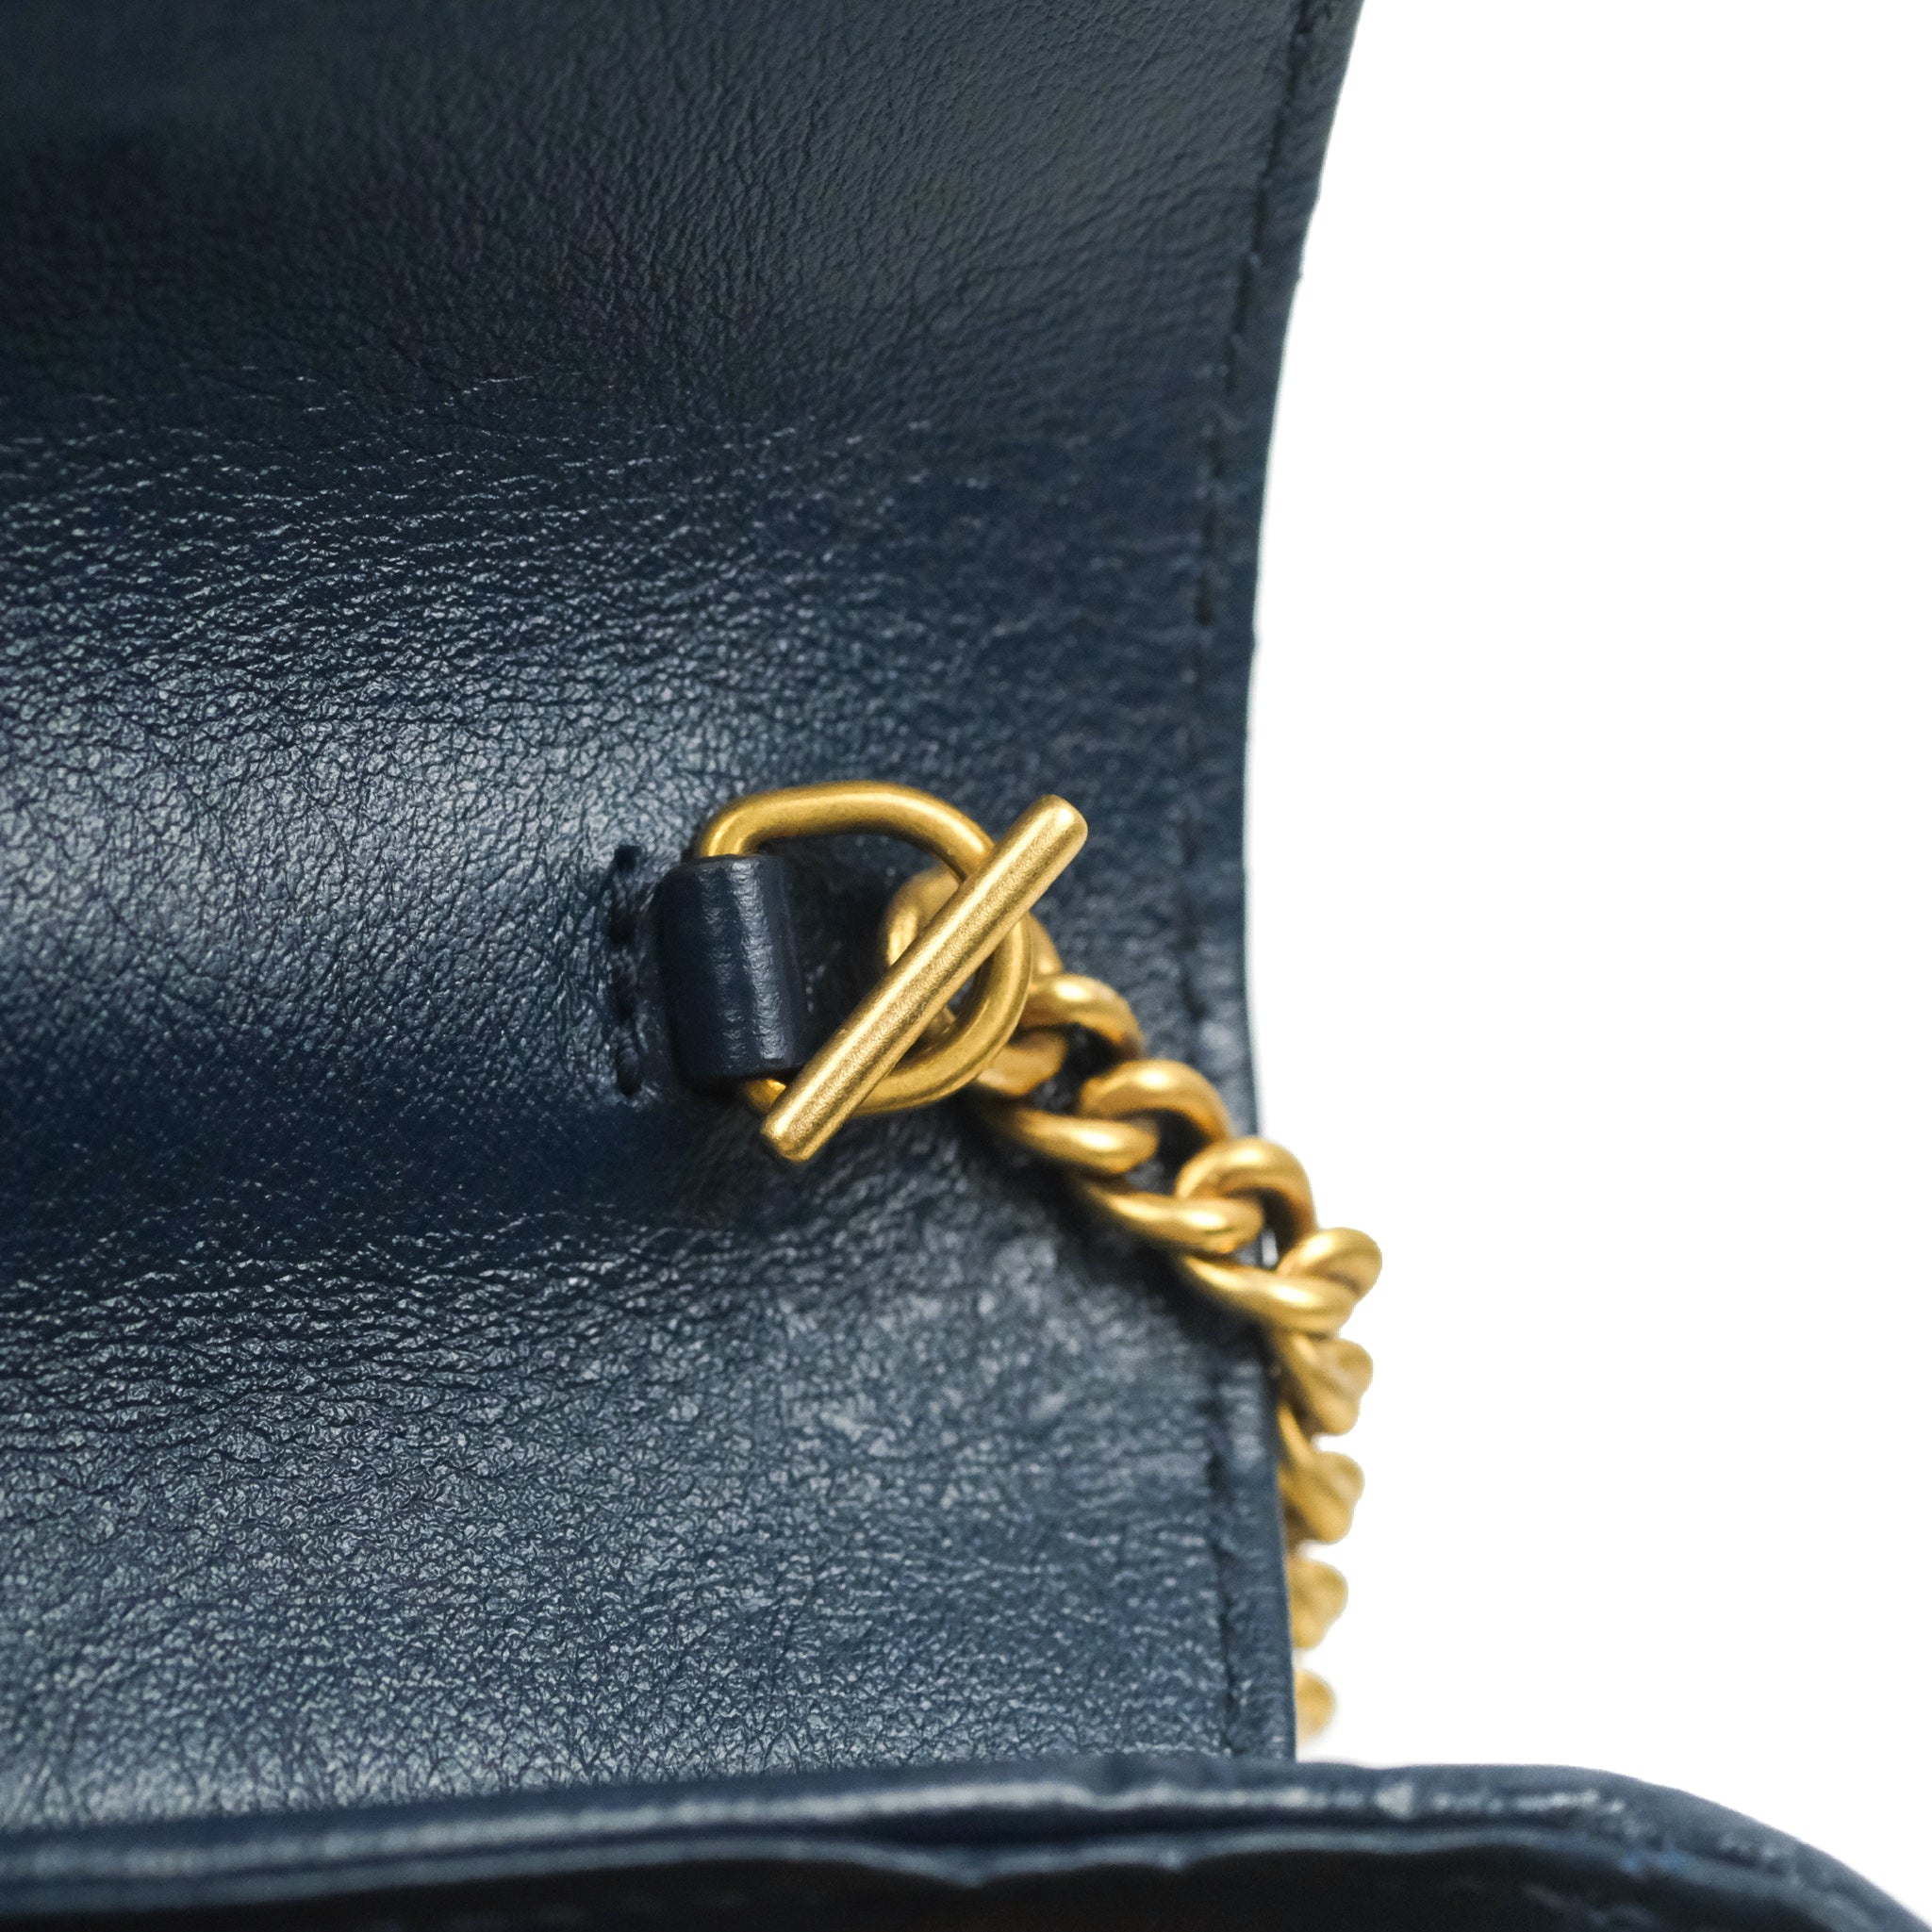 GG Marmont matelassé chain mini bag in white leather